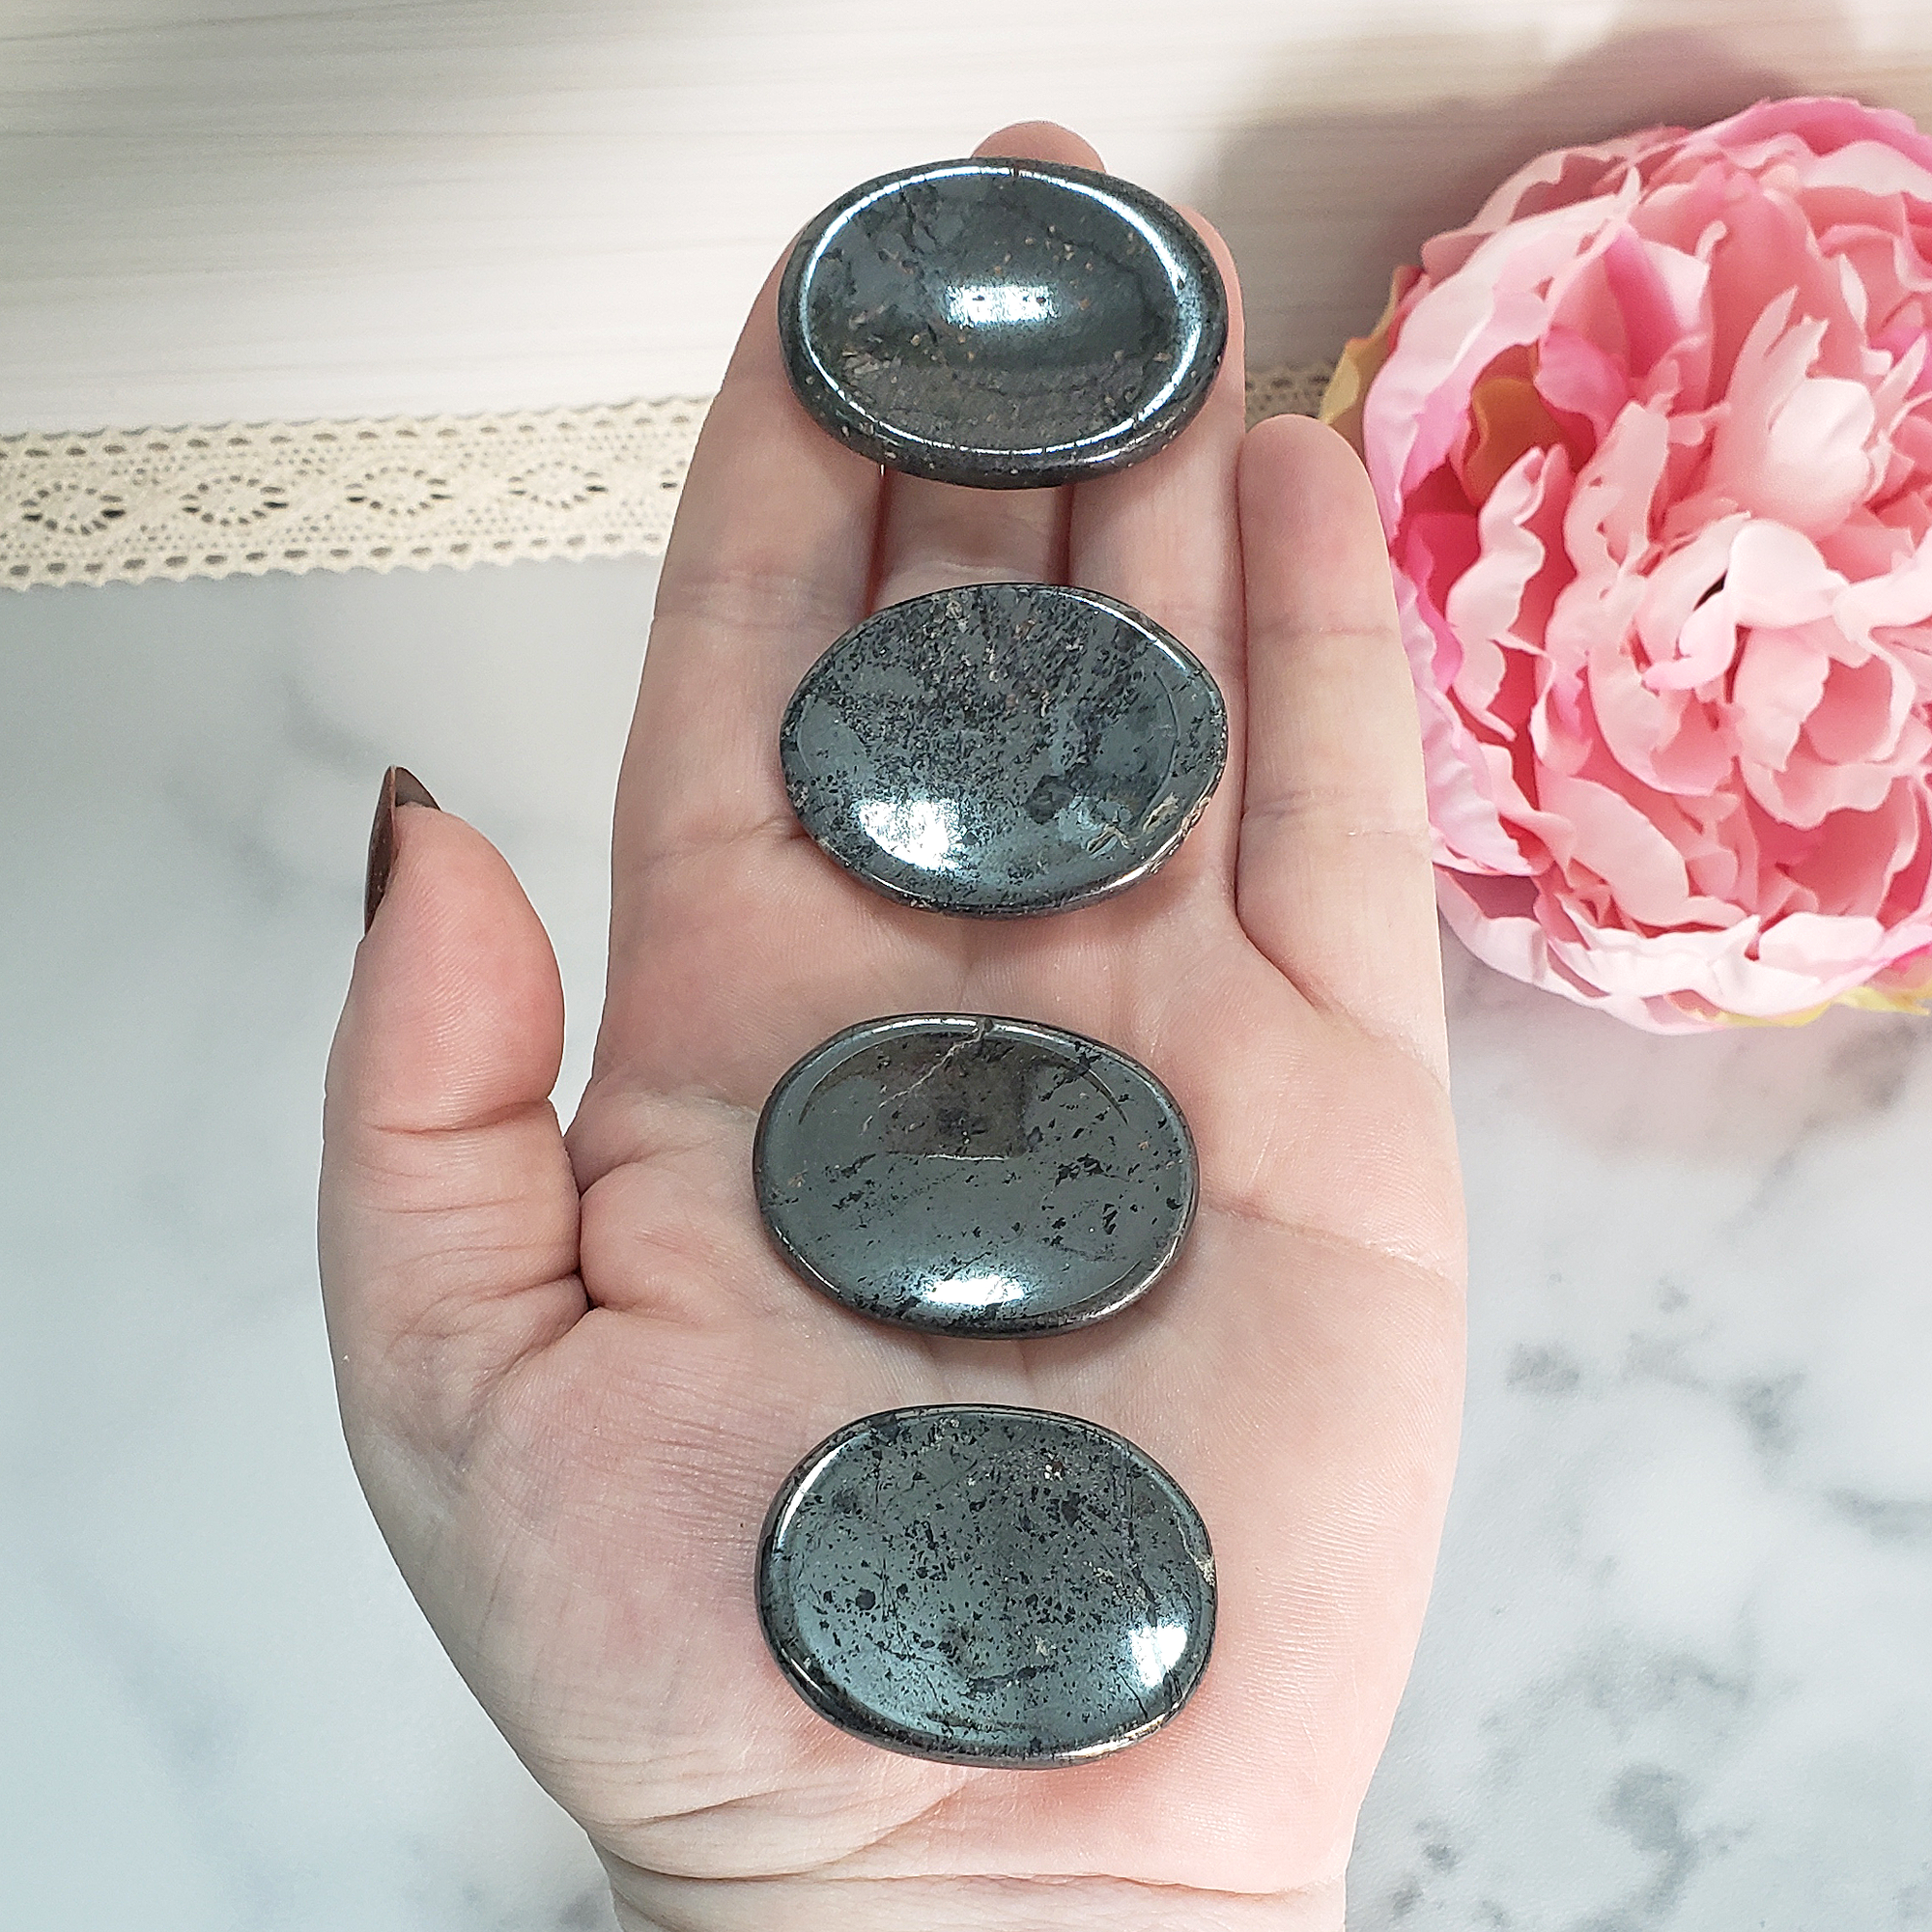 Hematite Crystal Natural Gemstone Worry Stone - Palm Stones for Meditation on Hand